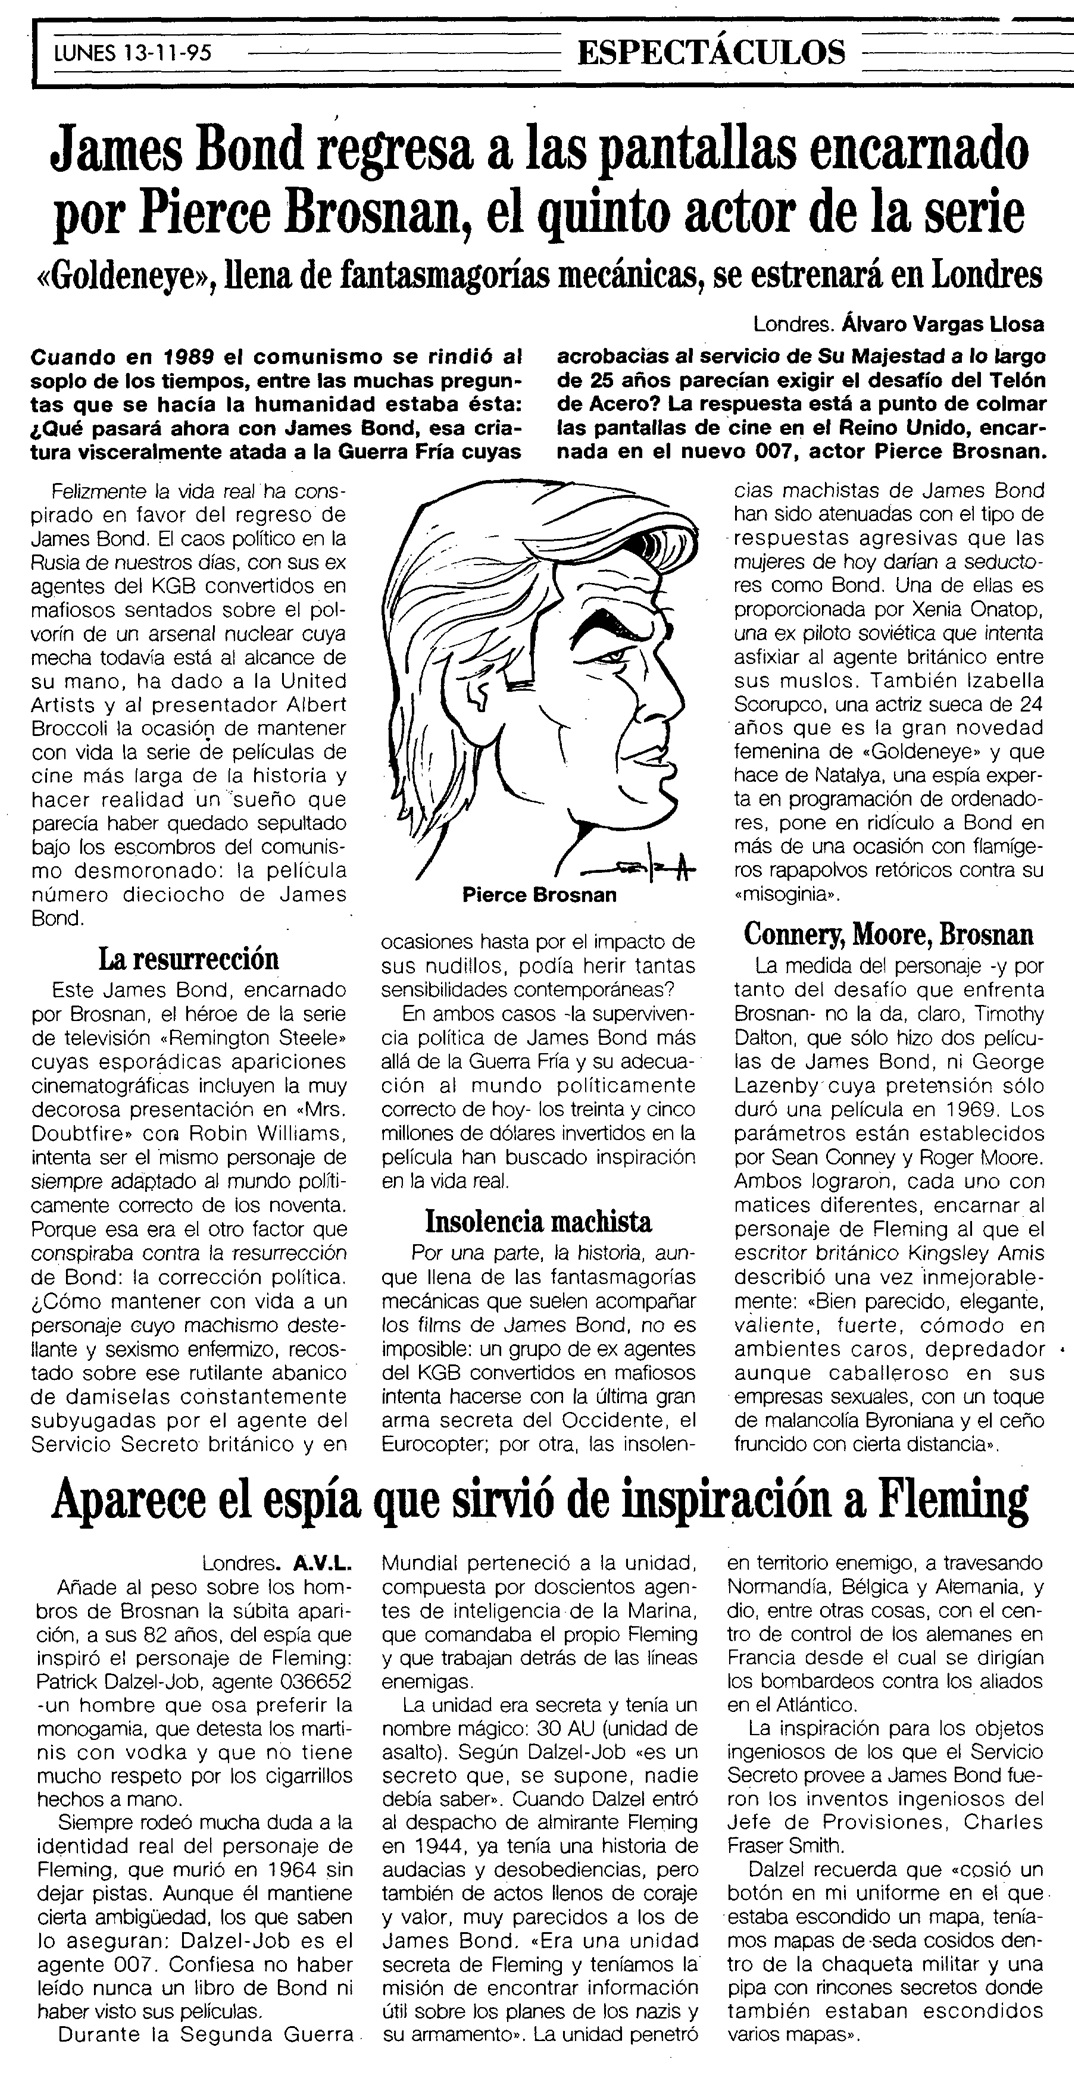 17 1995 11 13 ABC Madrid 105 Brosnan